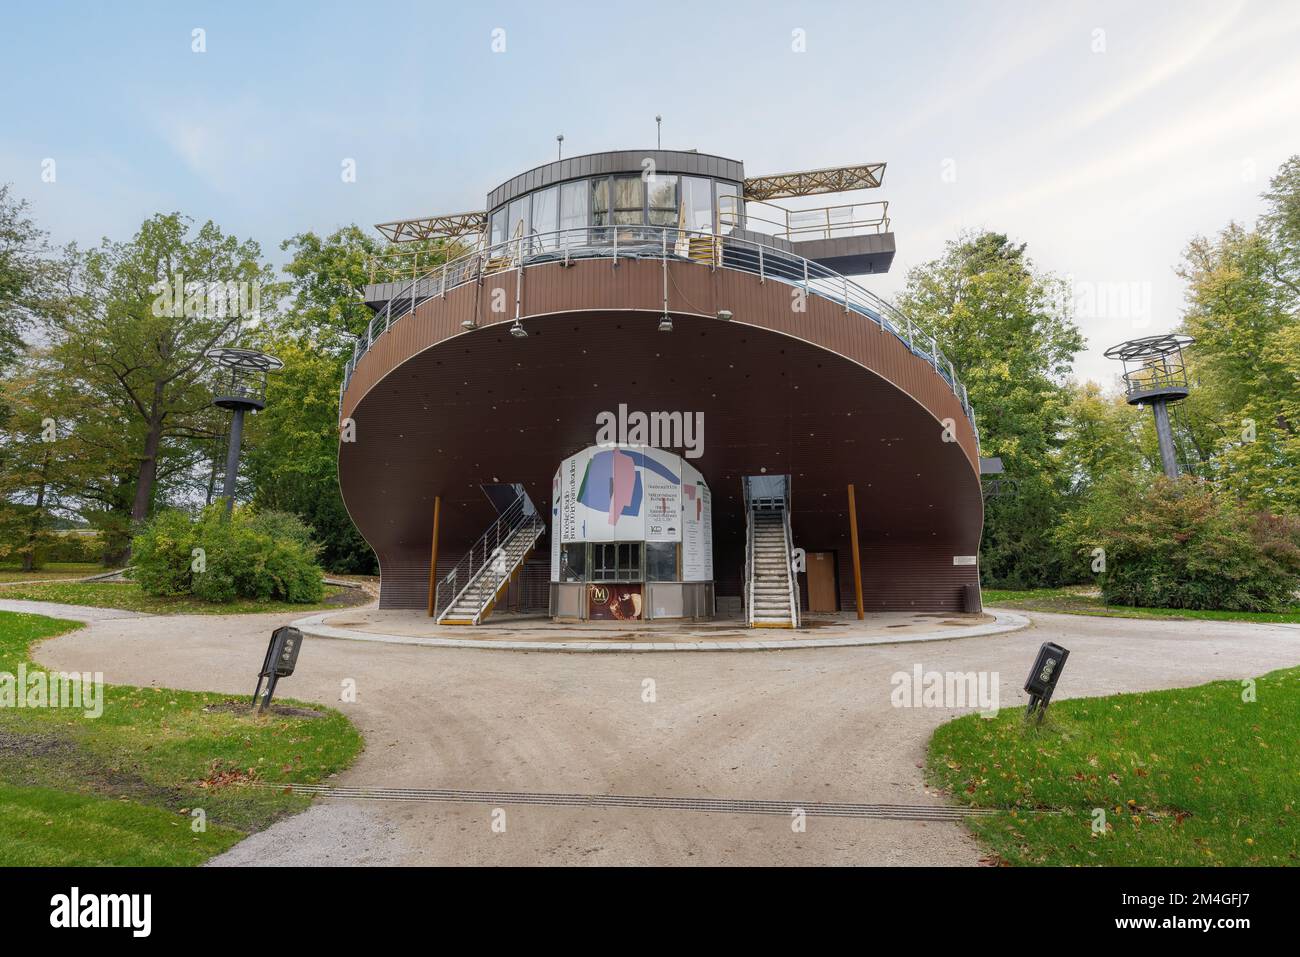 Open air Theatre with Revolving Auditorium at Cesky Krumlov Castle Garden - Cesky Krumlov, Czech Republic Stock Photo